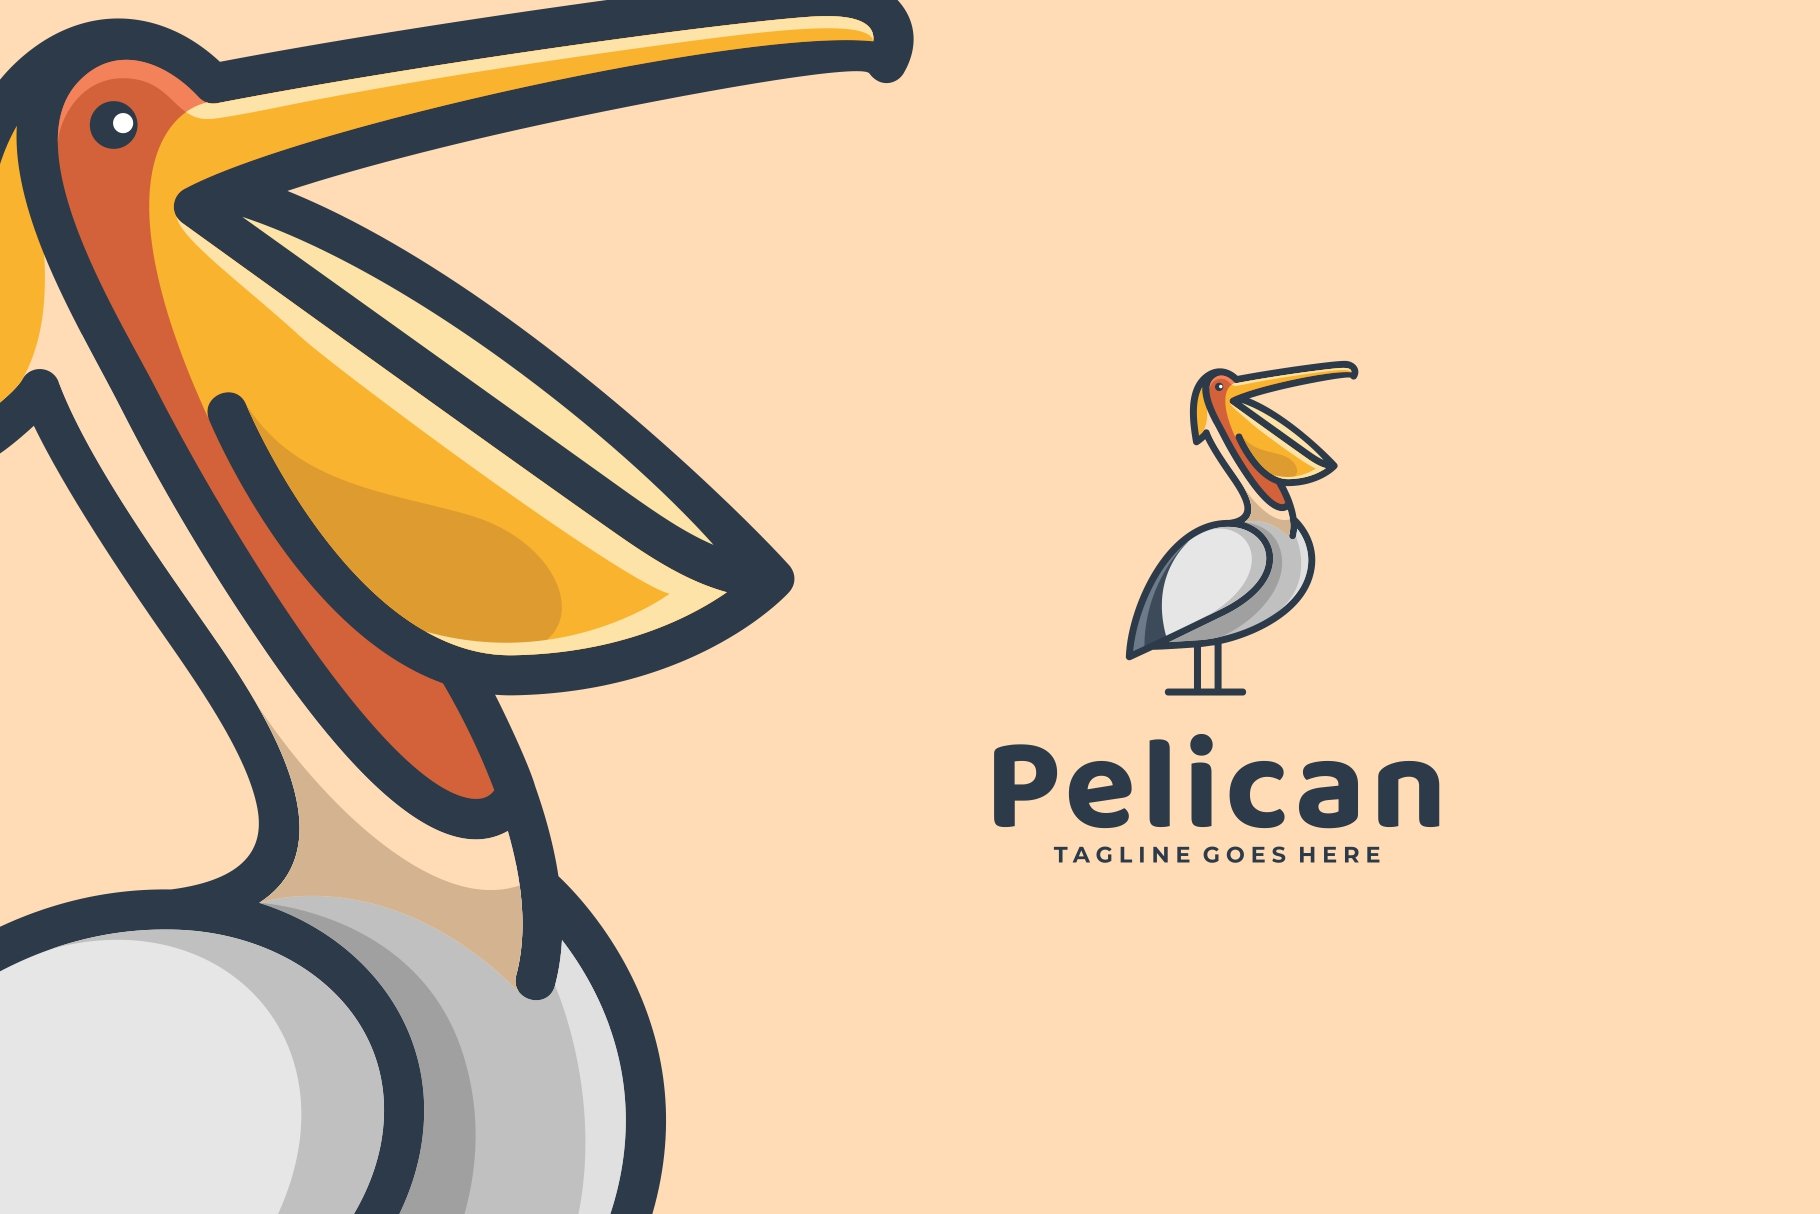 Pelican Simple Mascot Logo cover image.